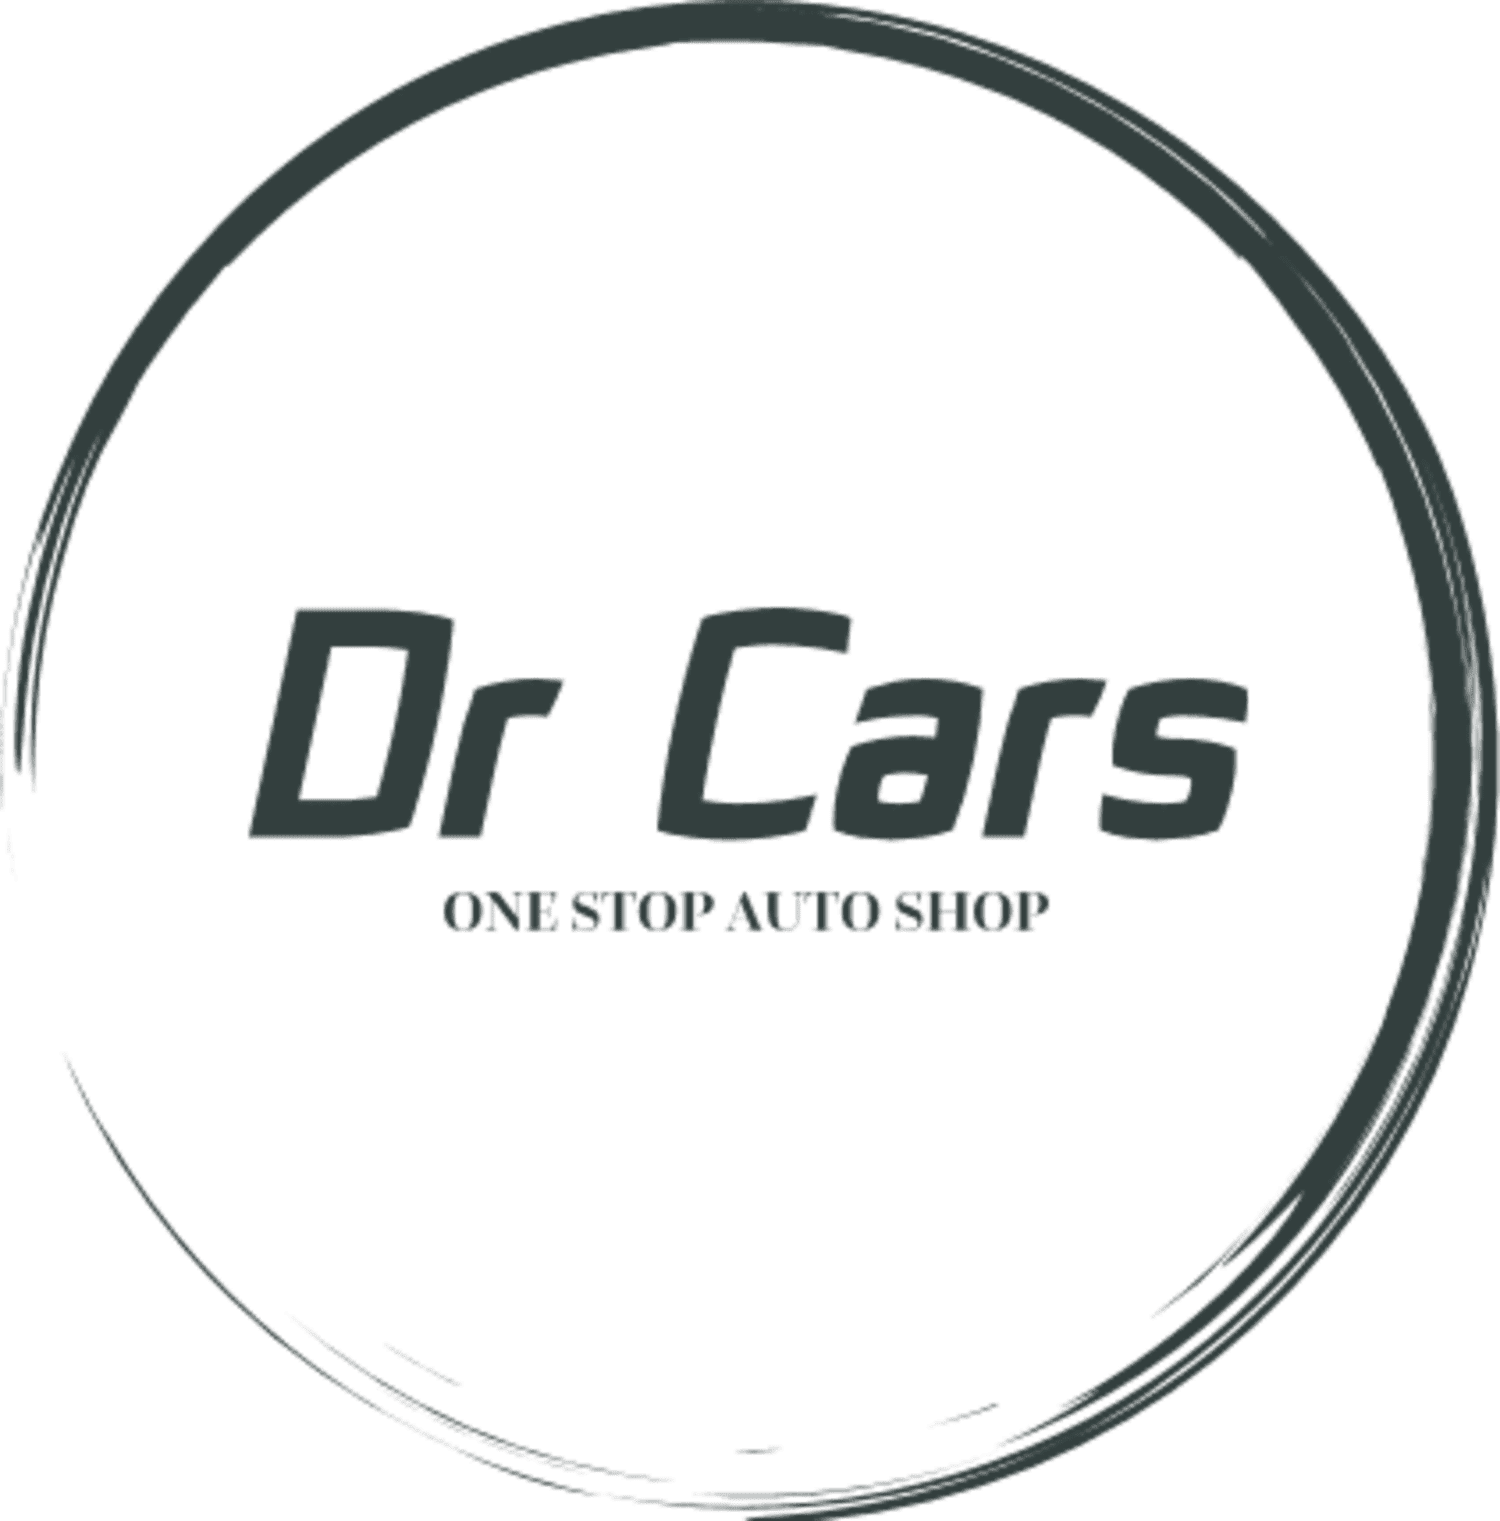 Dr. Cars